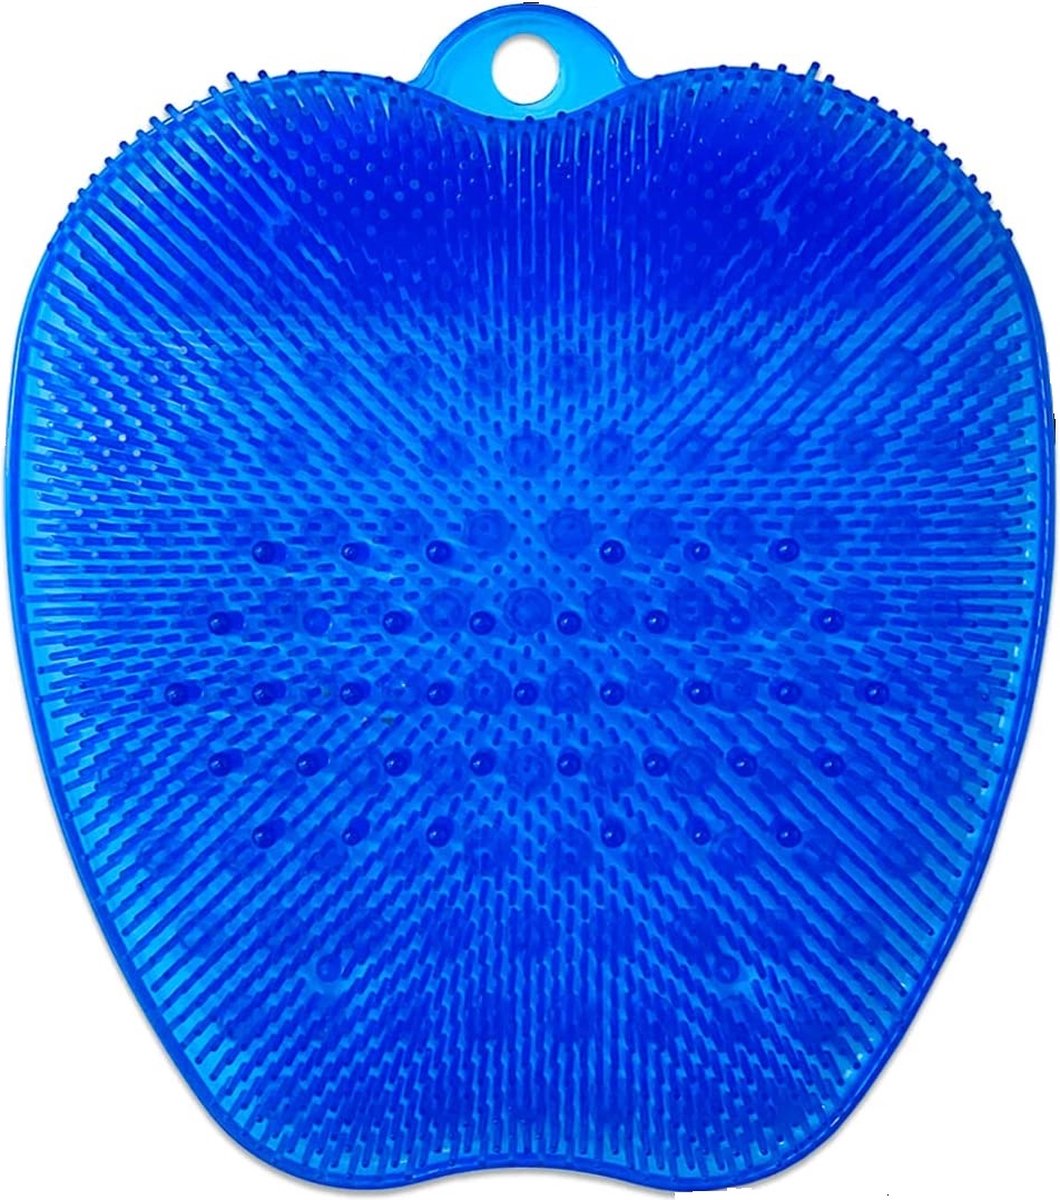 Fundigo VoetScrubber - Voetborstel - Scrub - Voetmassage apparaat - exfoliant - Douchemat - Met zuignappen - Donker Blauw